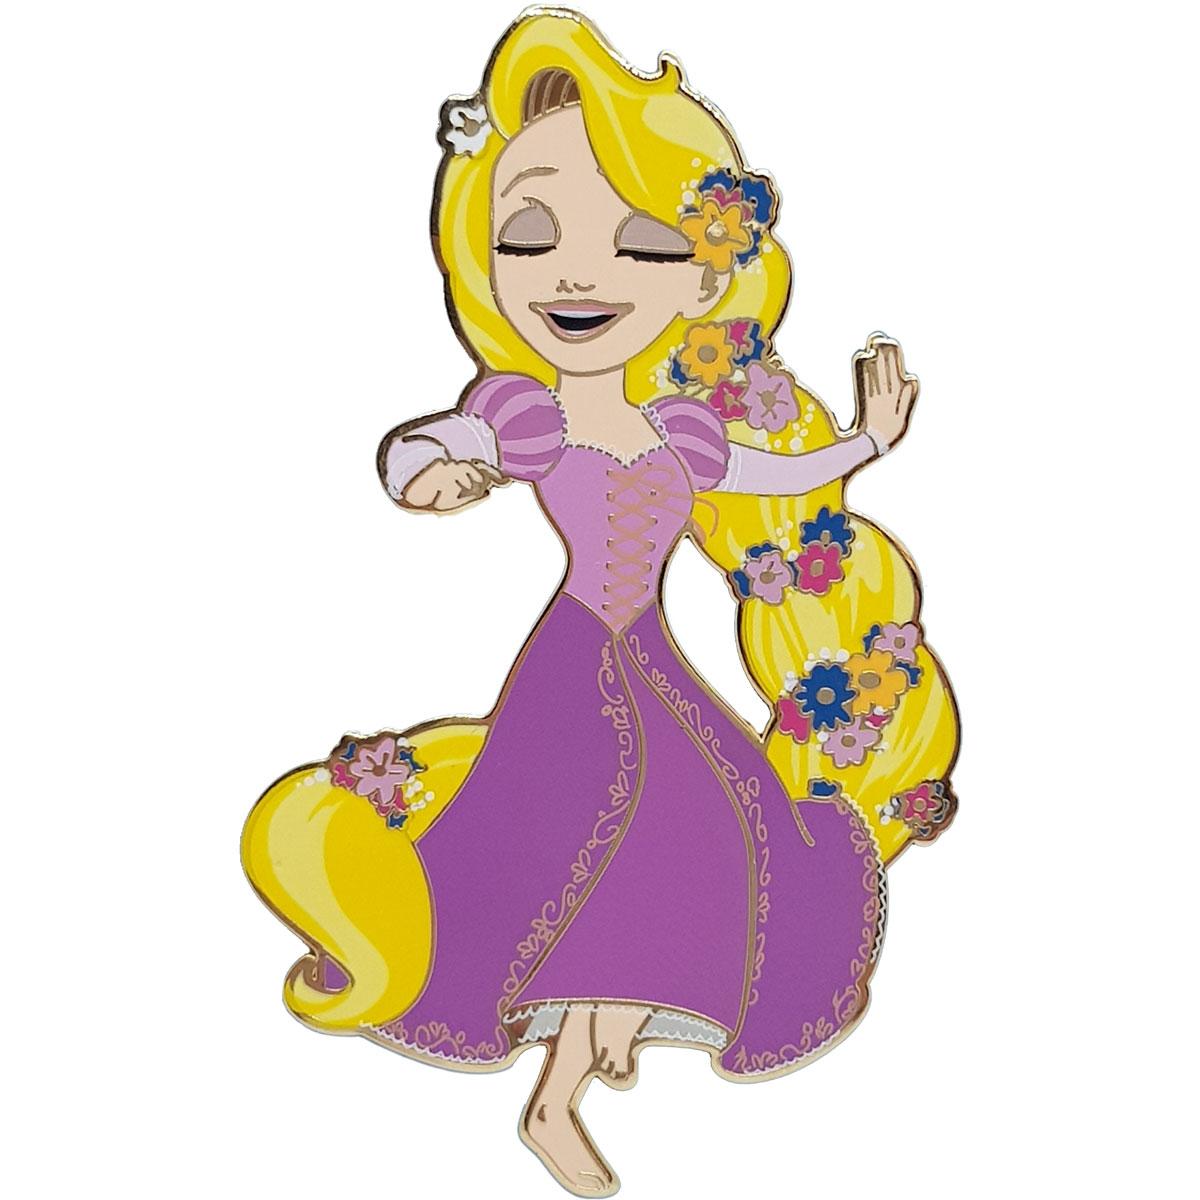 Acme-Hotart - Dancing Princesses - Rapunzel